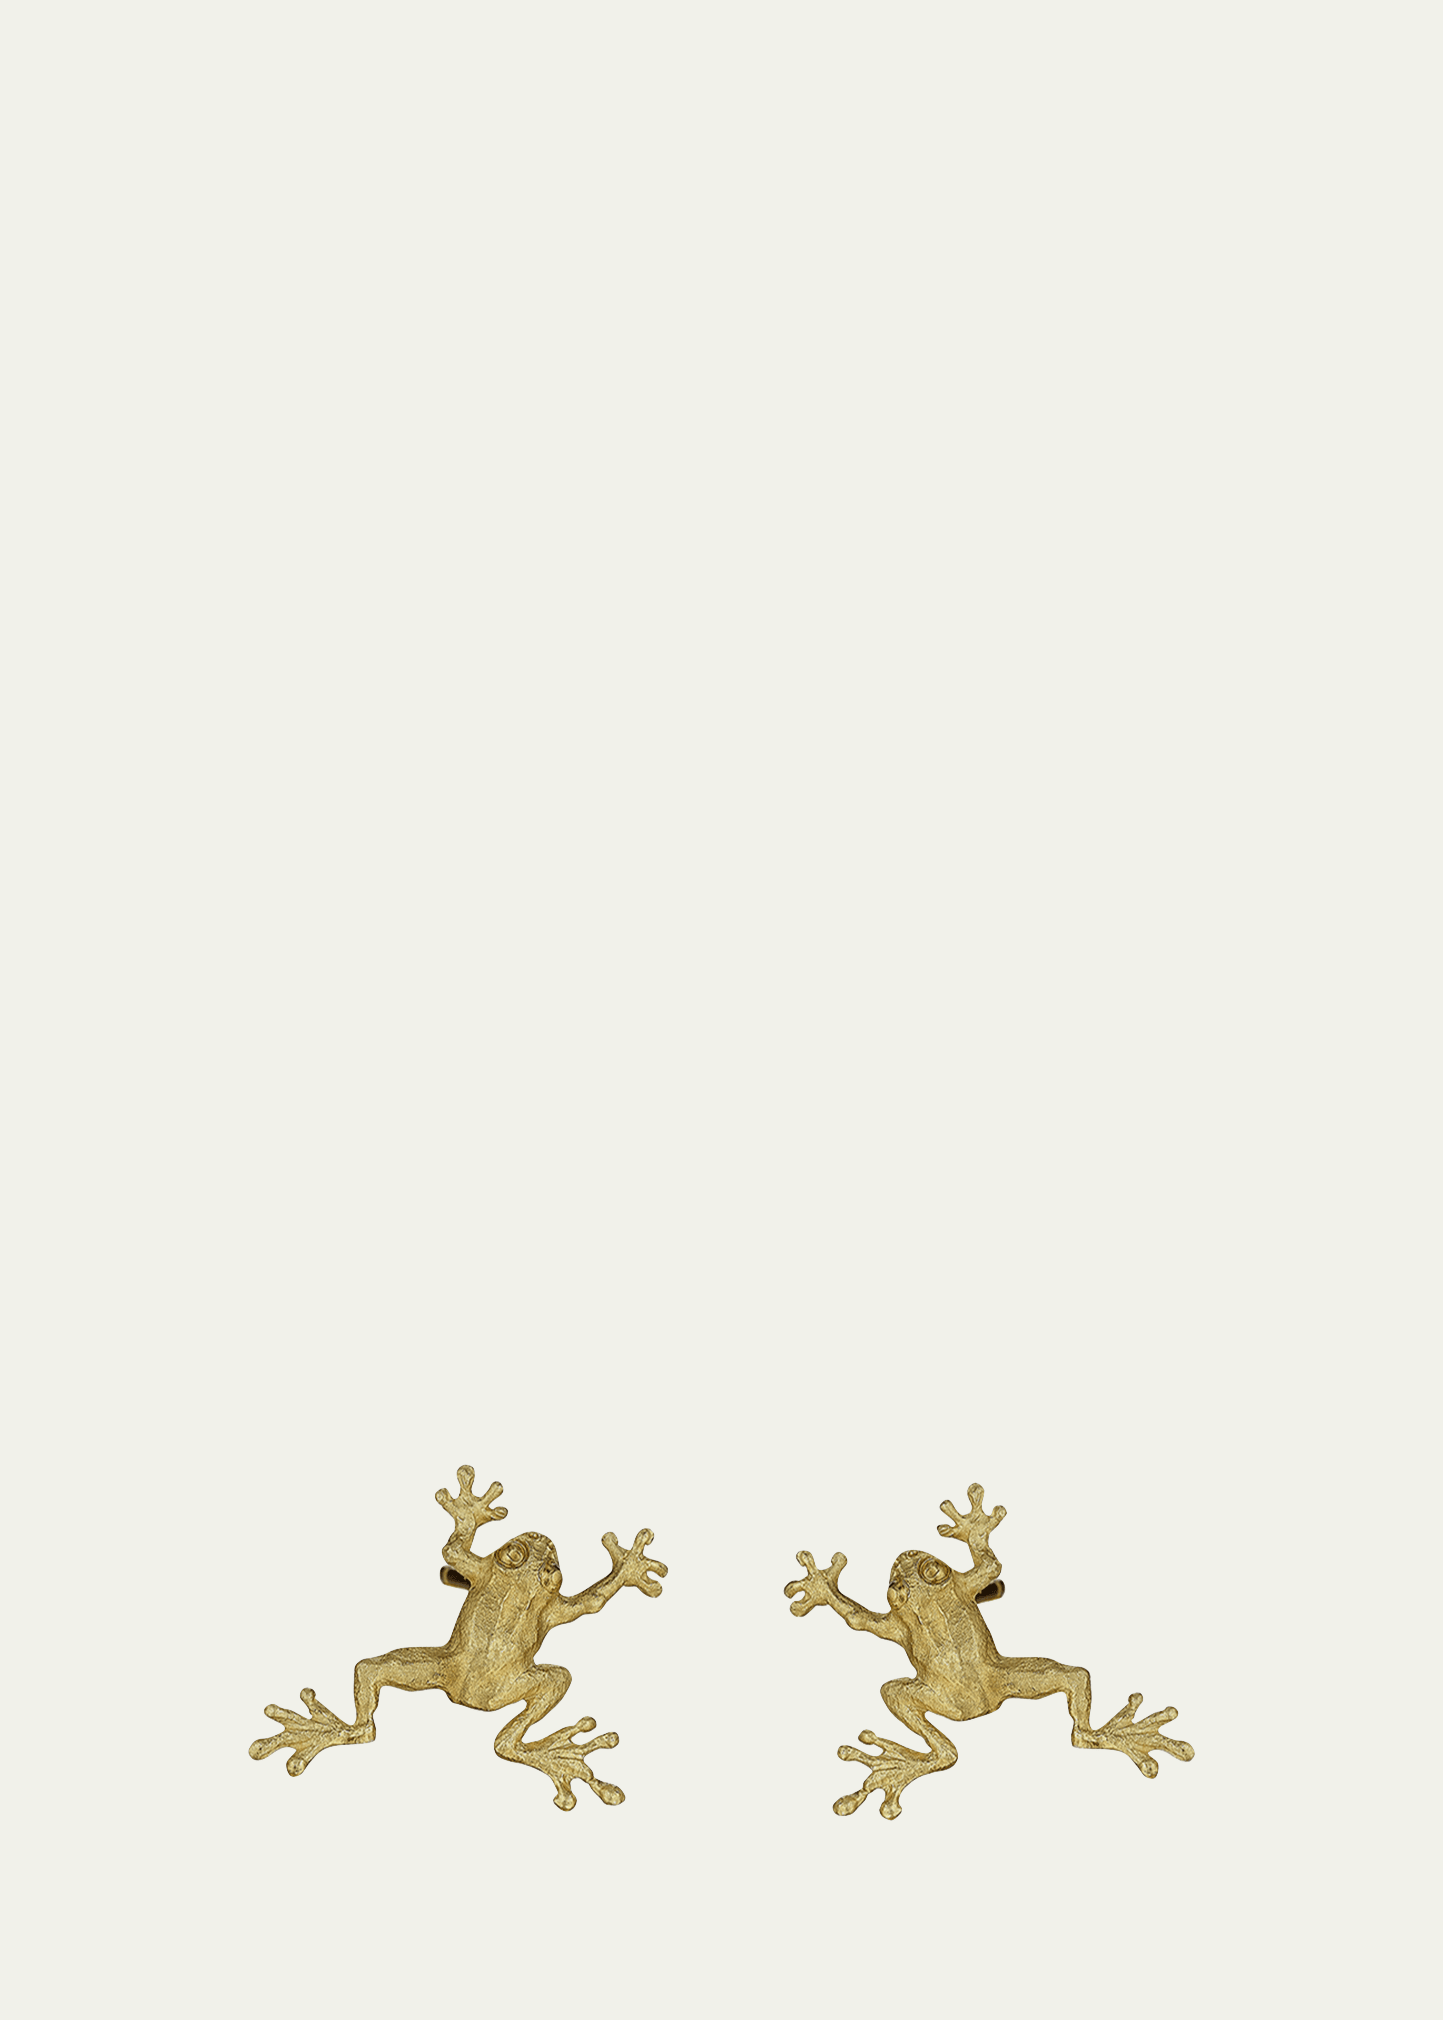 Climbing Tree Frog Stud Earrings in 18k Yellow Gold and Diamonds